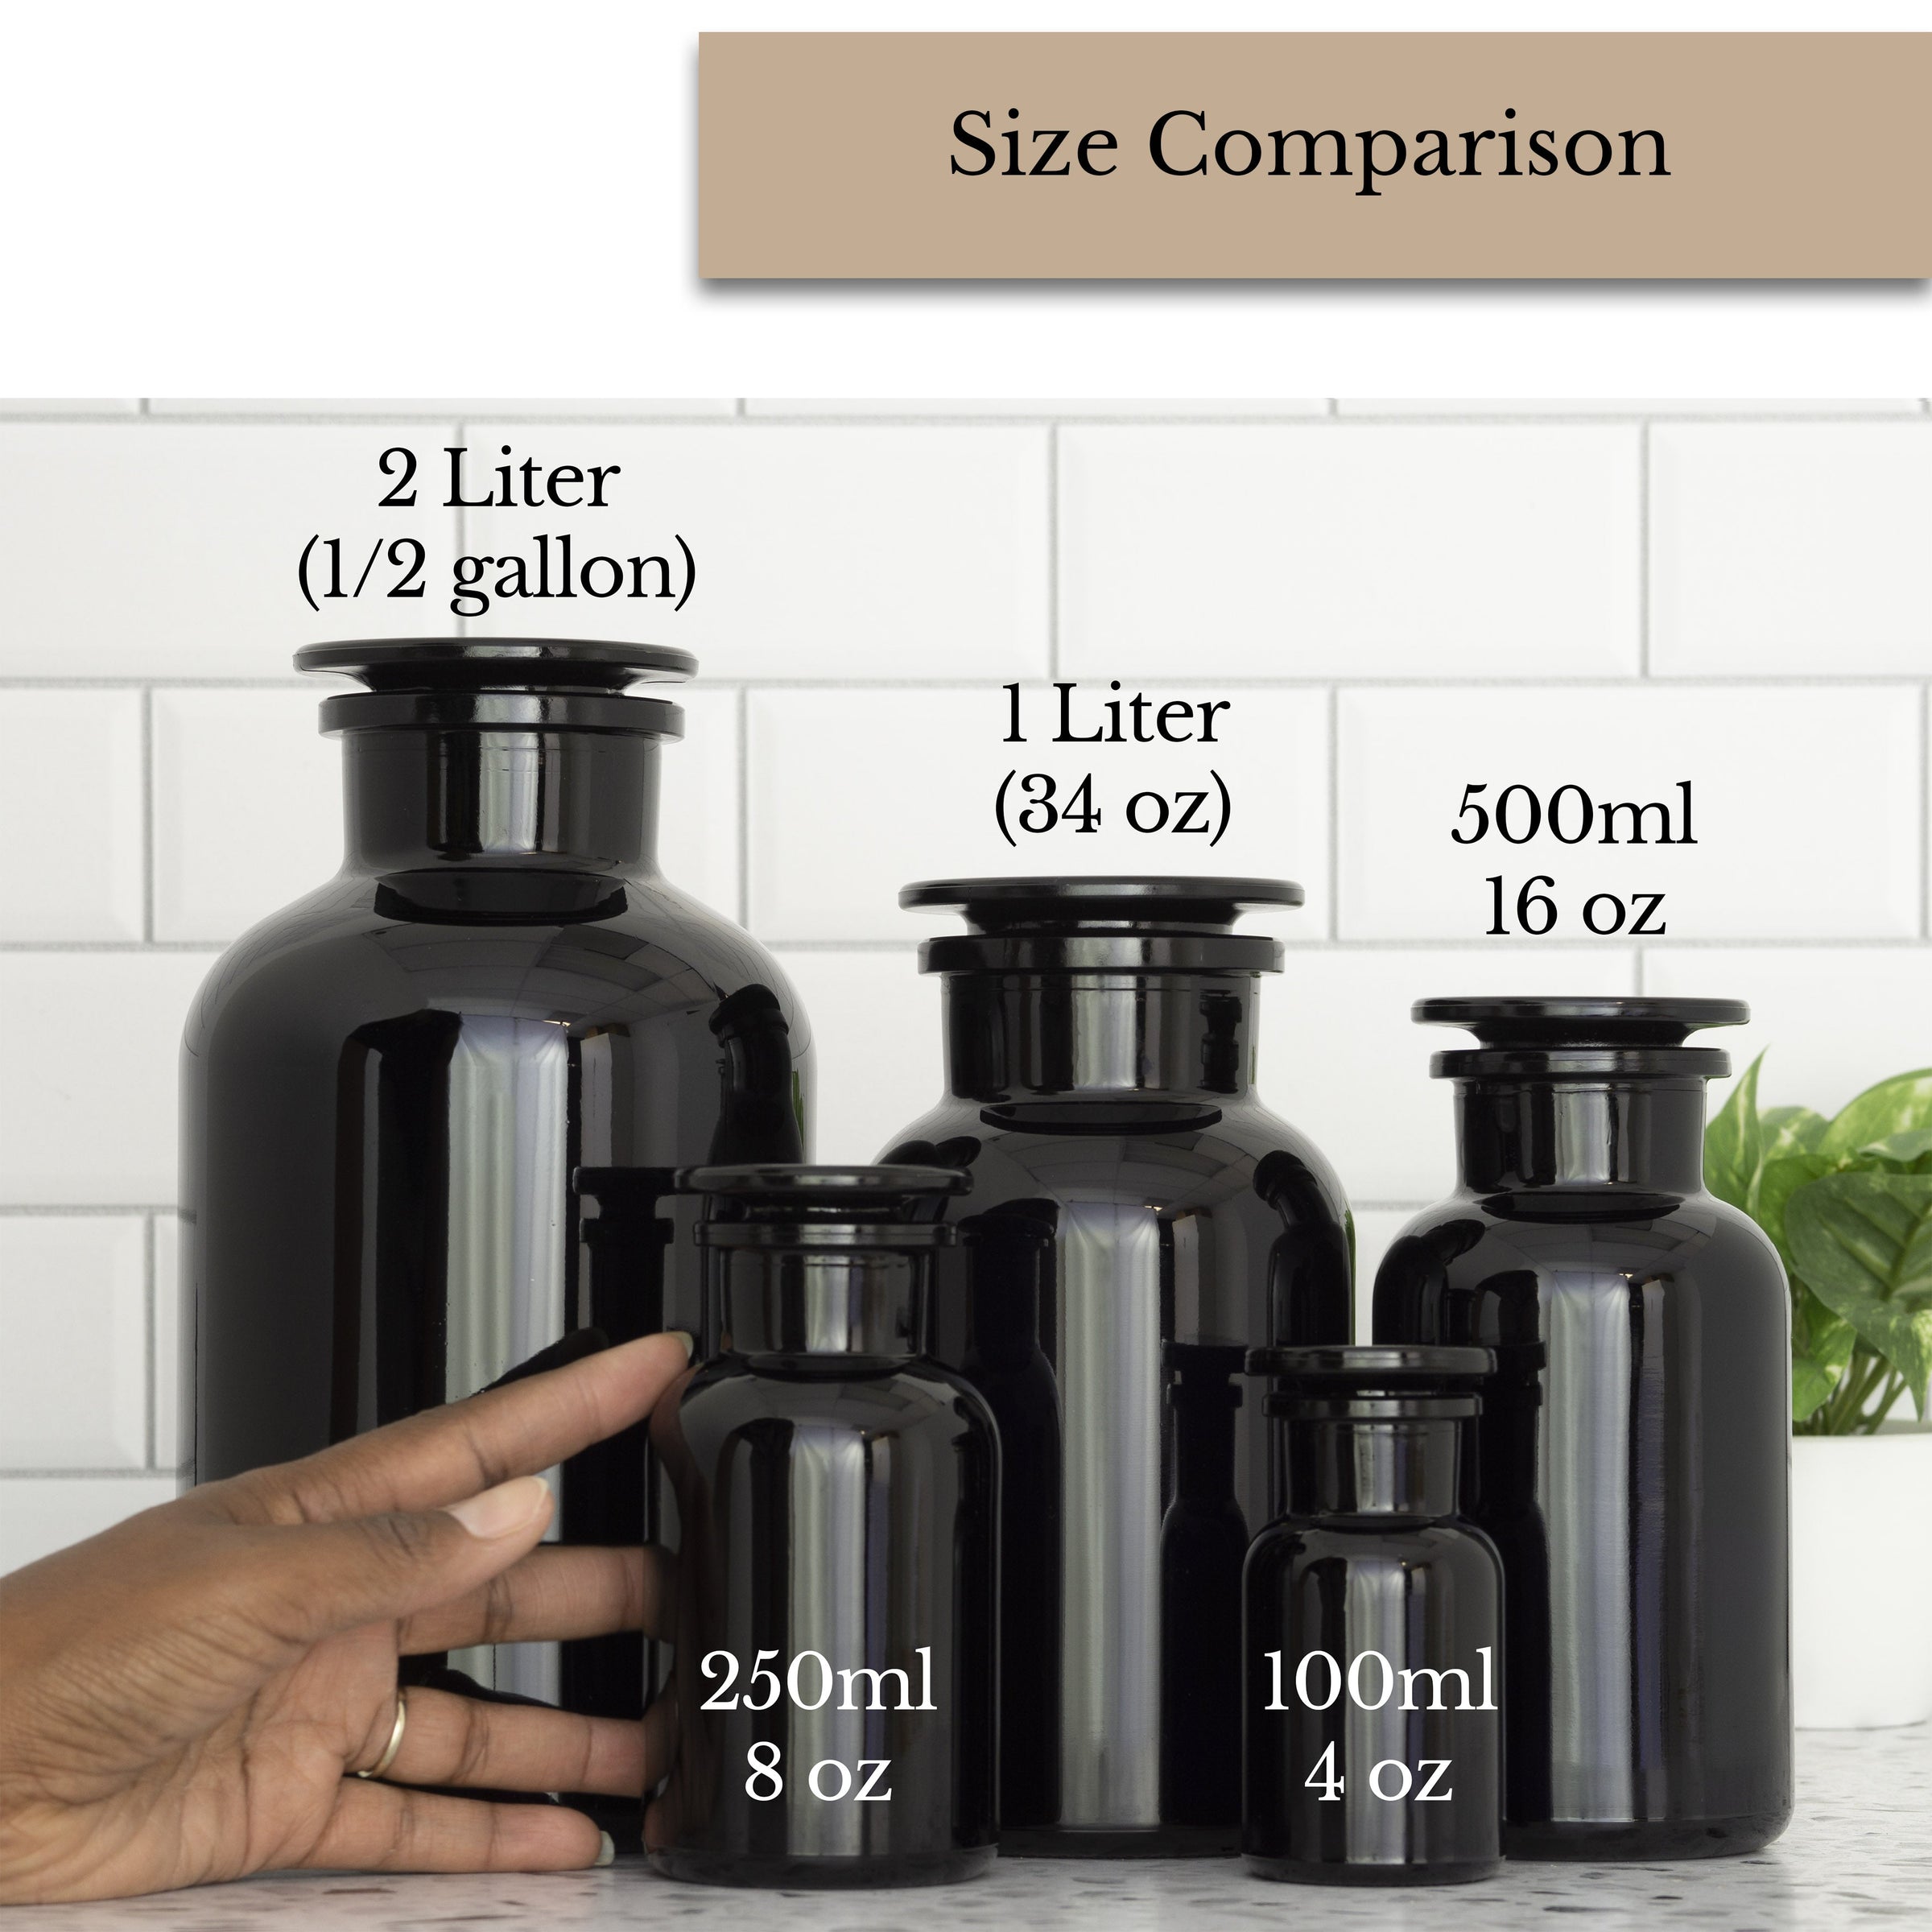 Infinity Jars 250 ml (8.5 fl oz) Black Ultraviolet All Glass Refillable Empty Apothecary Jar